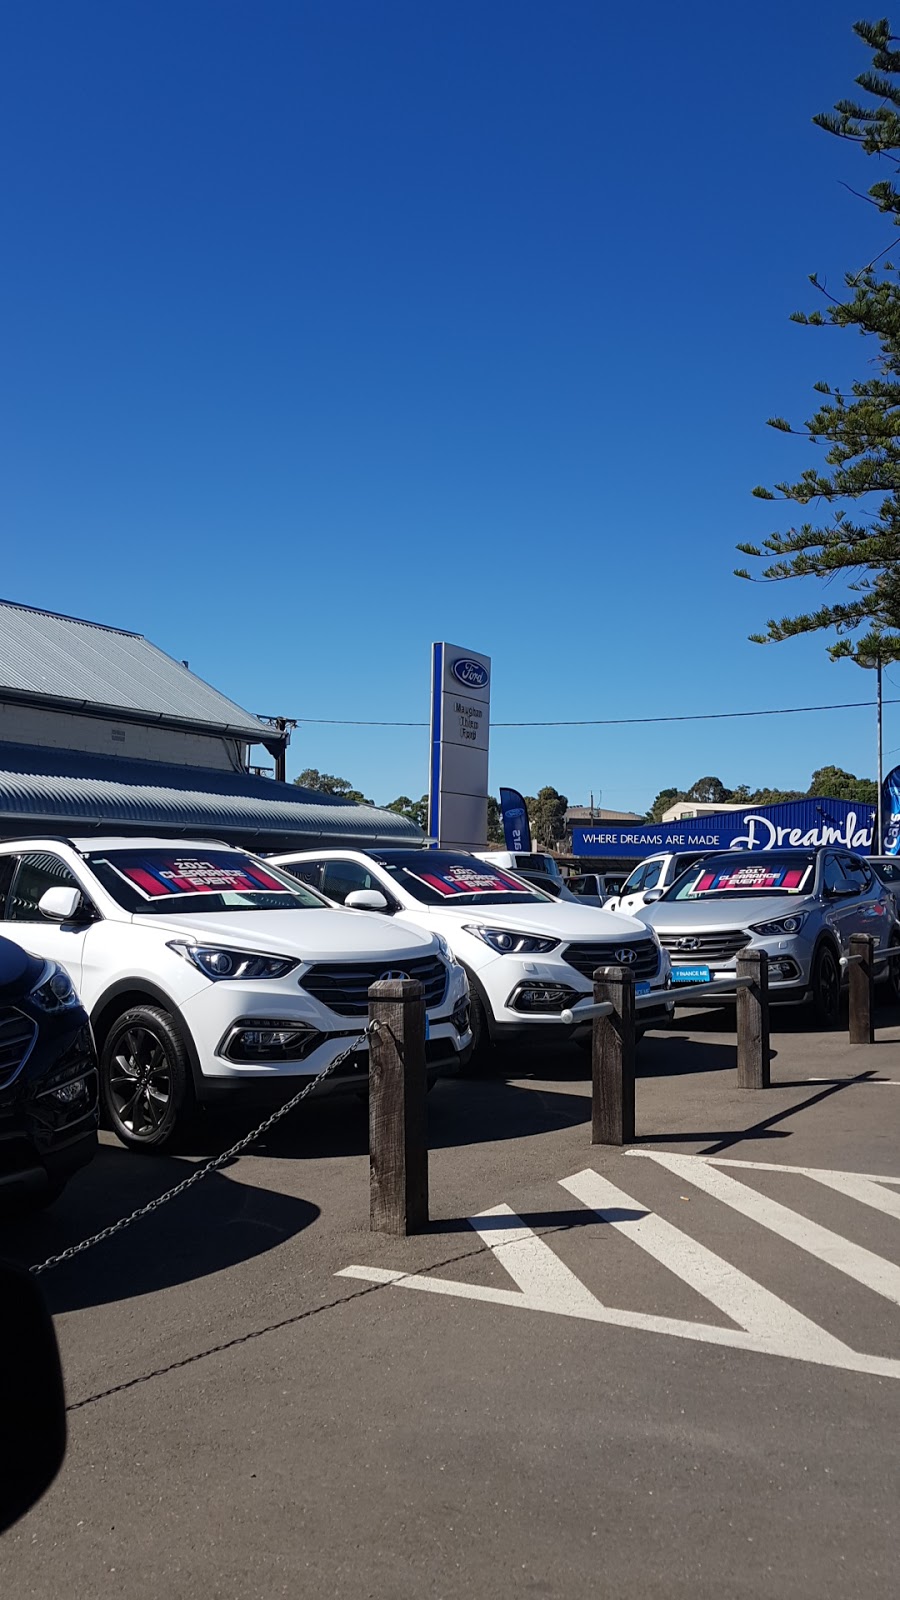 Maughan Thiem Hyundai | car dealer | 28 Mount Barker Rd, Totness SA 5250, Australia | 0883936100 OR +61 8 8393 6100